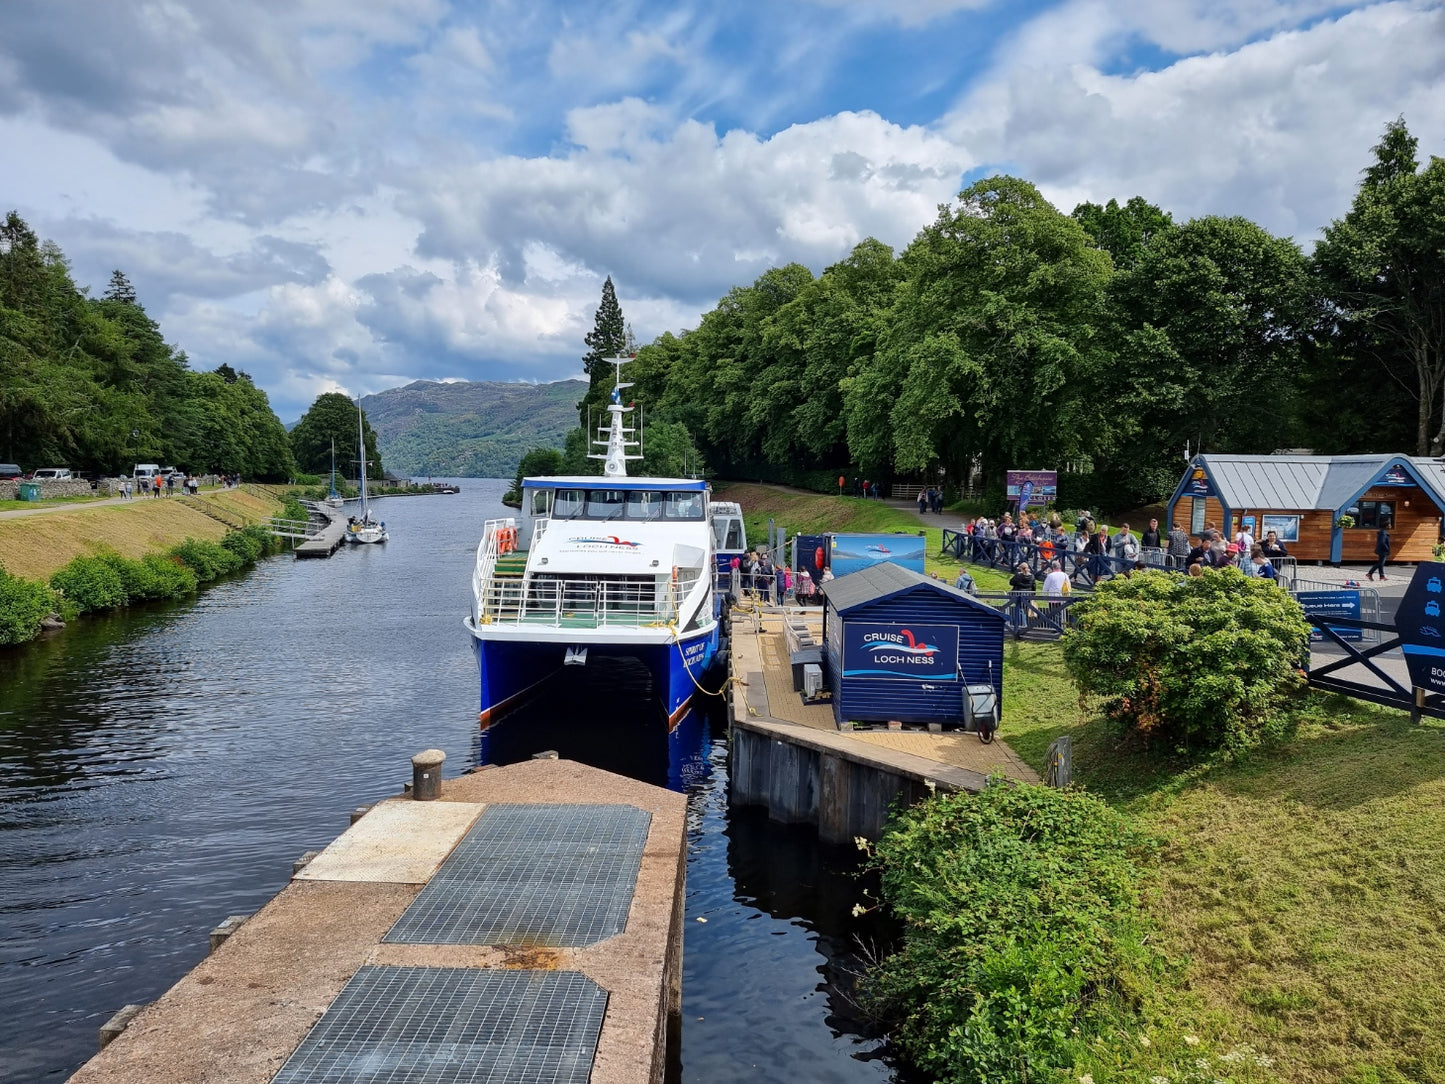 Loch Ness Day Tour from Edinburgh or Glasgow